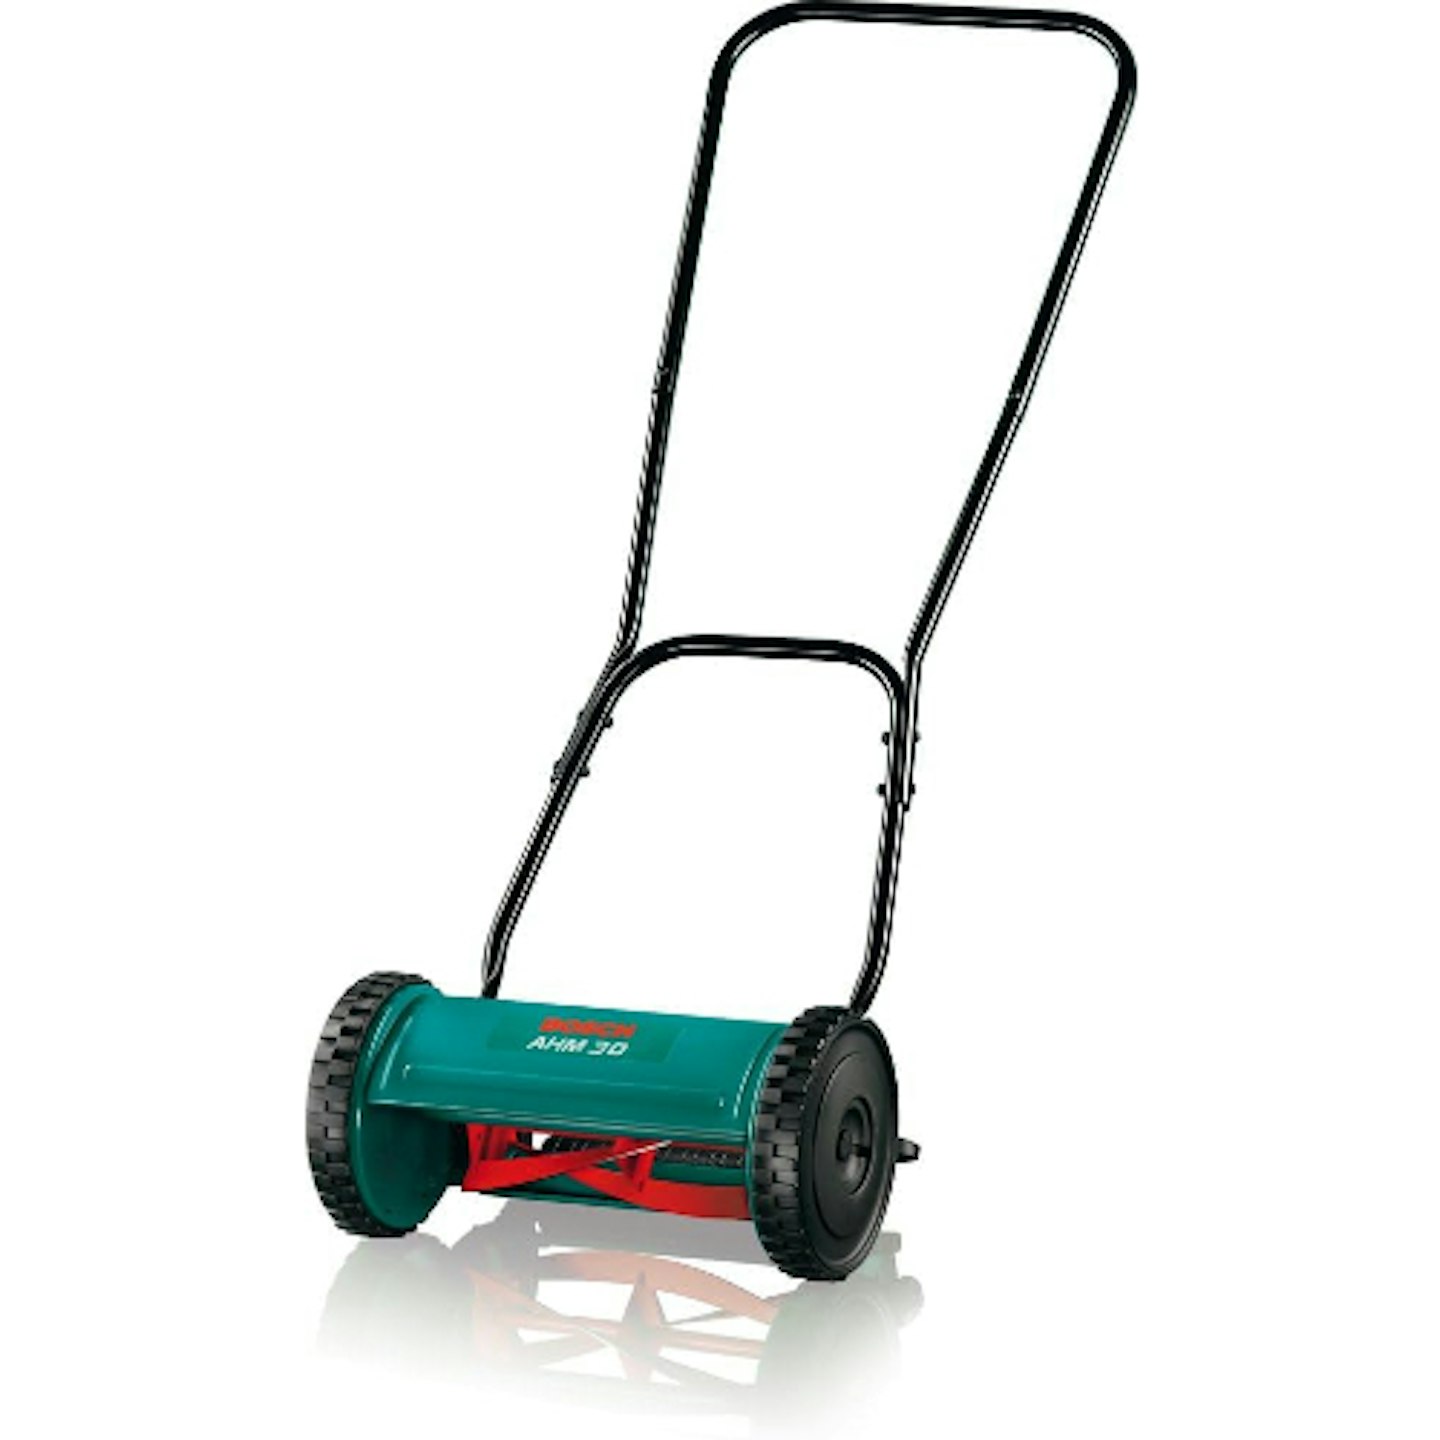 Bosch manual lawn mower